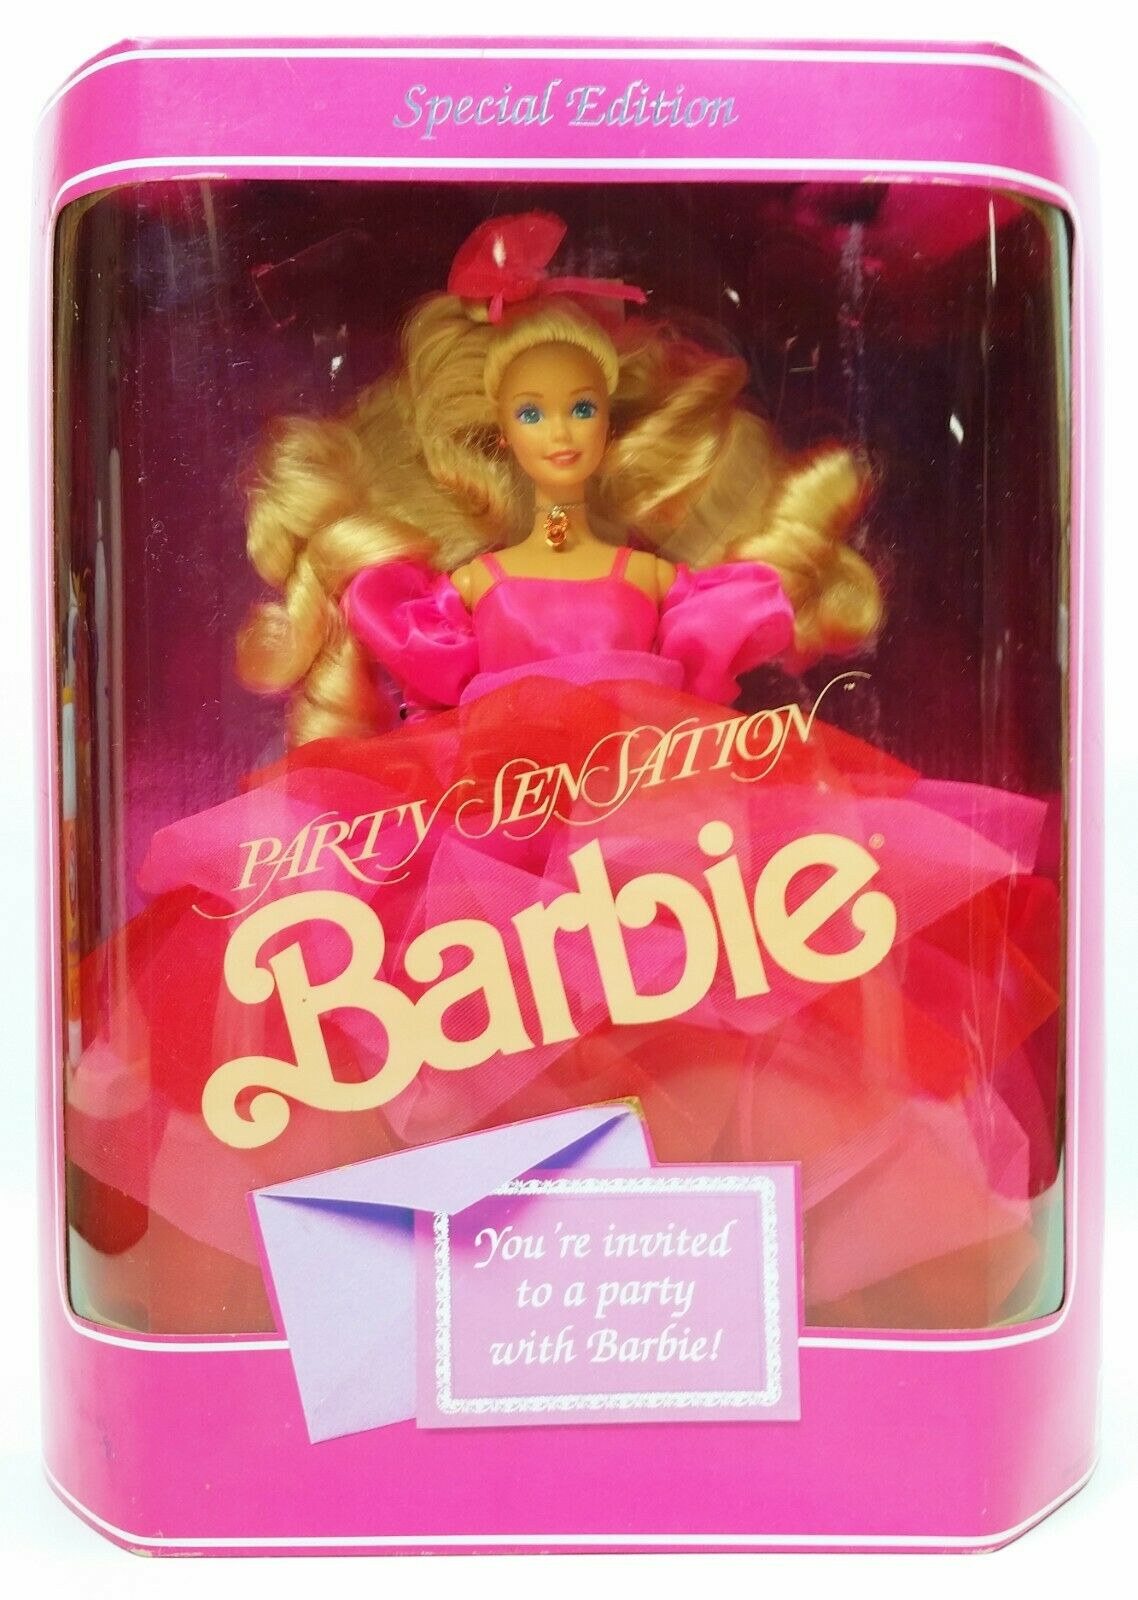 1990_special_edition_party_sensation_barbie.jpg